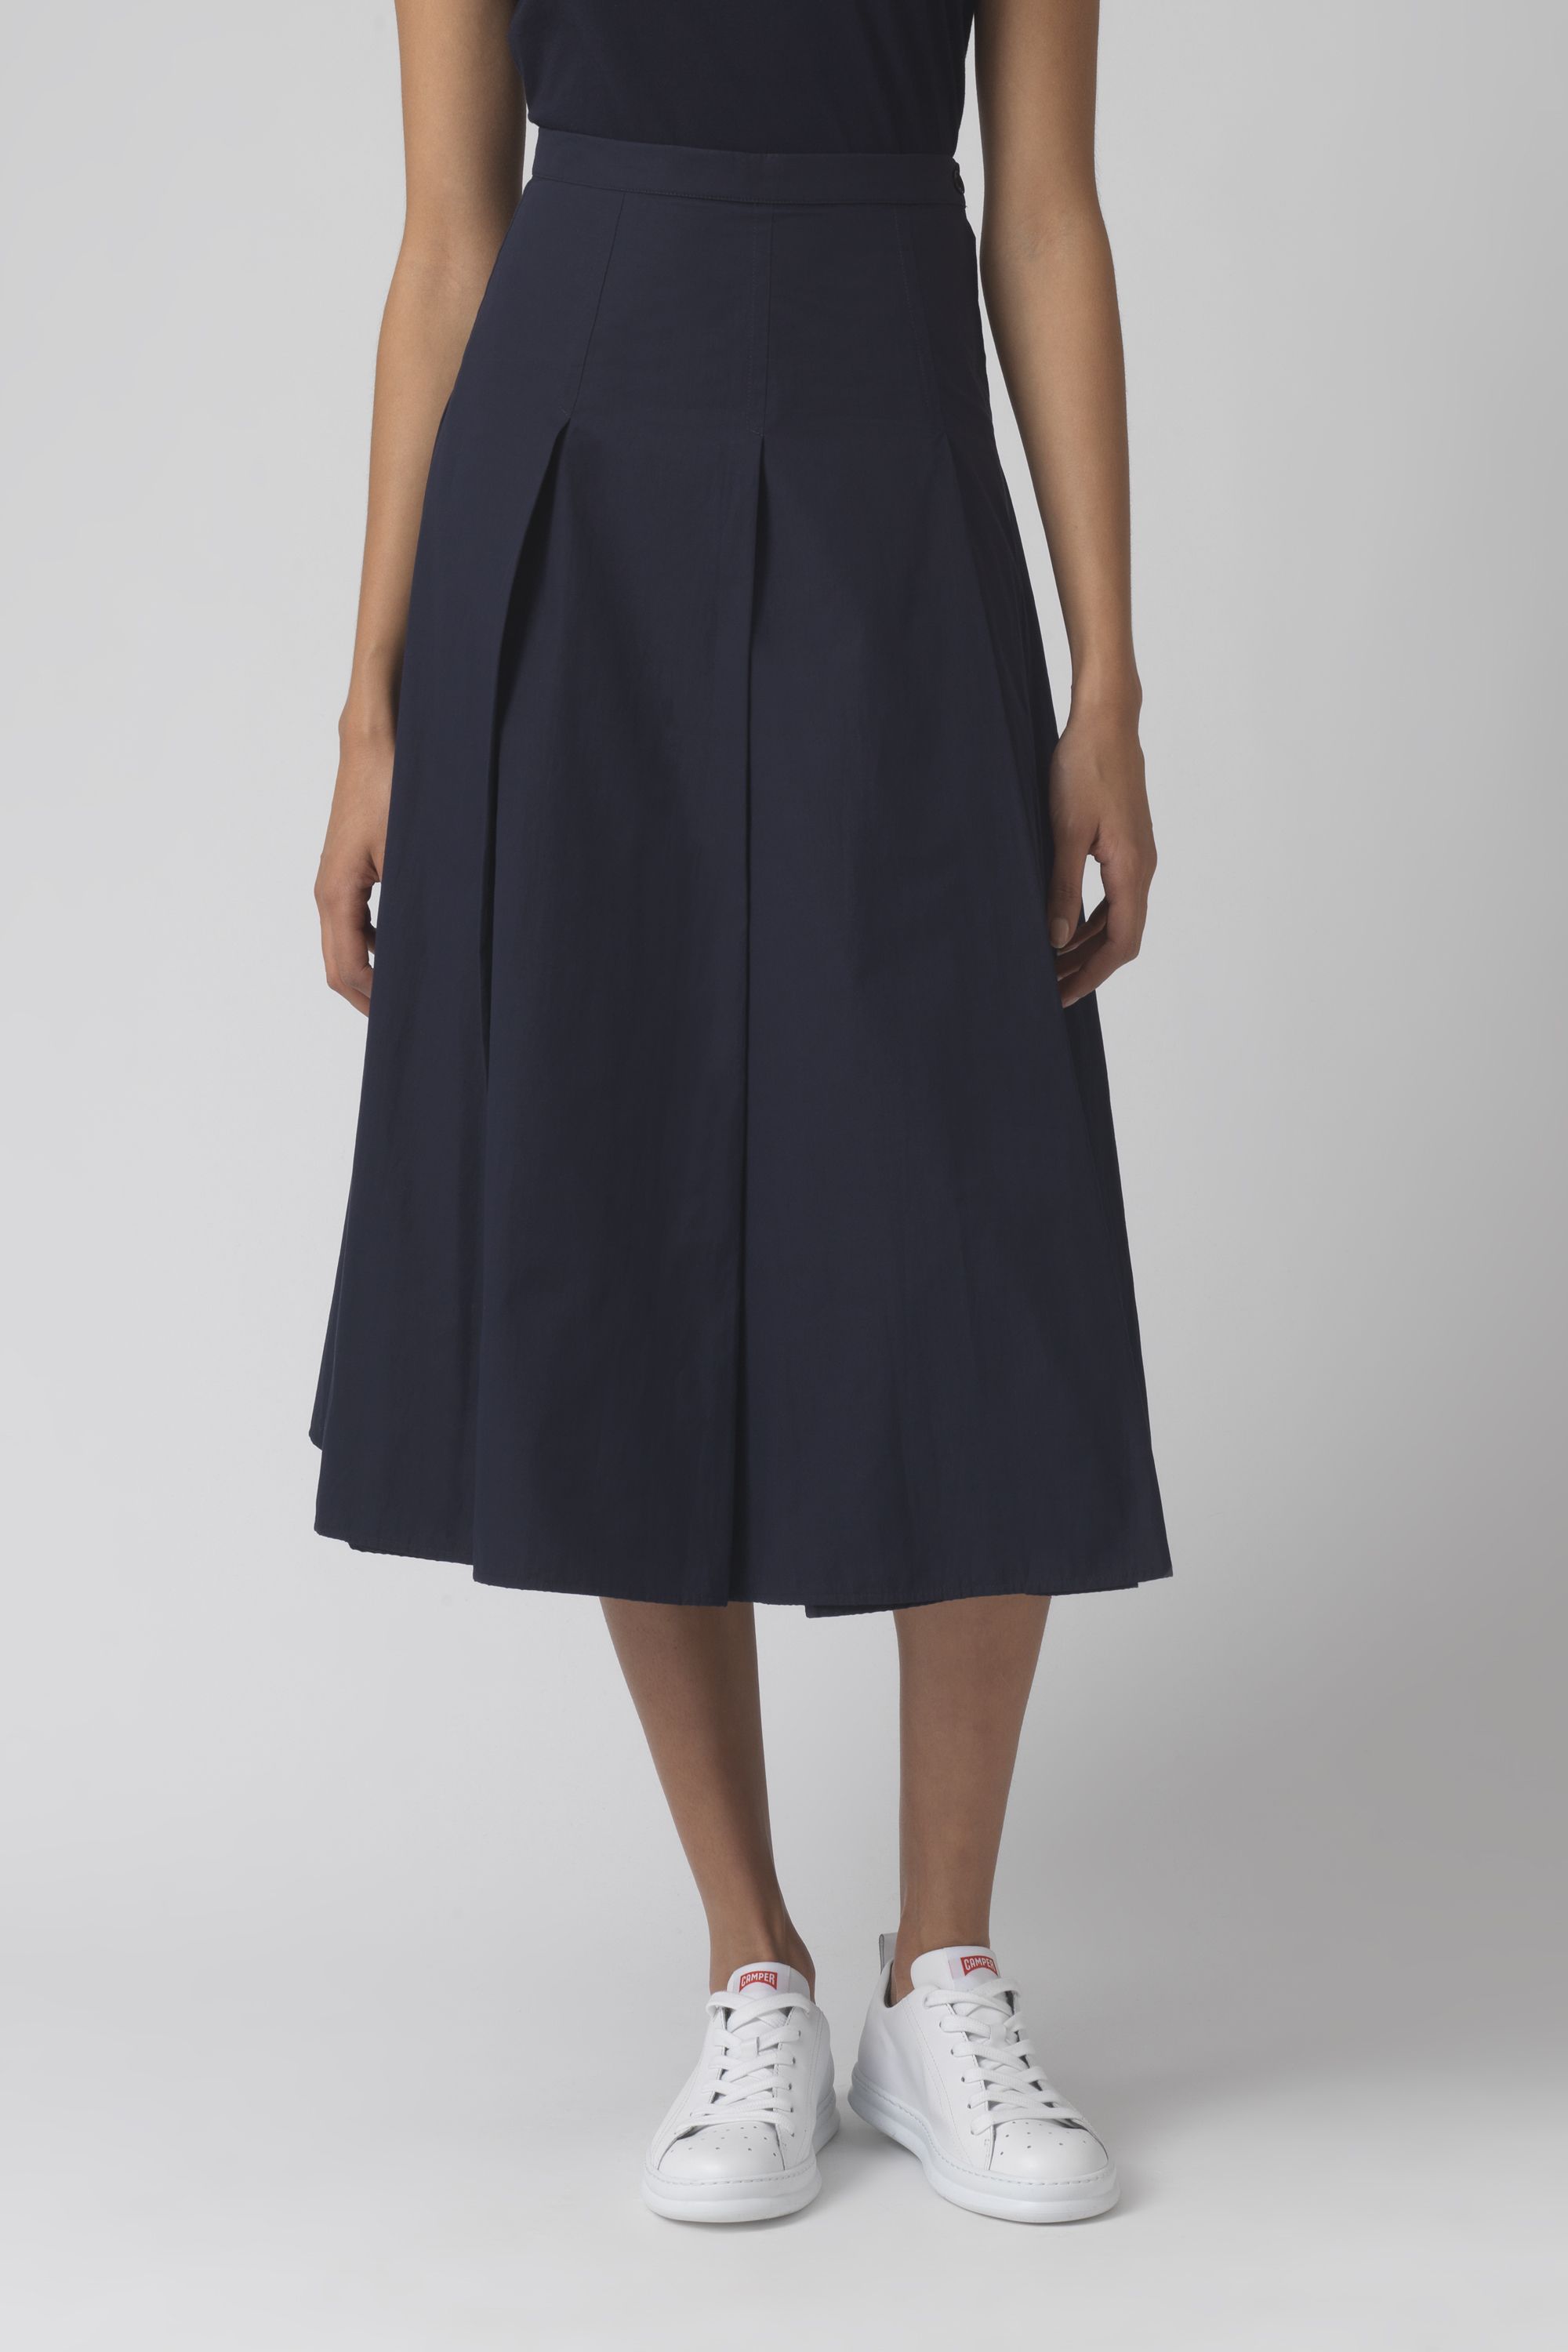 Rose navy organic cotton skirt - Katharine Hamnett London